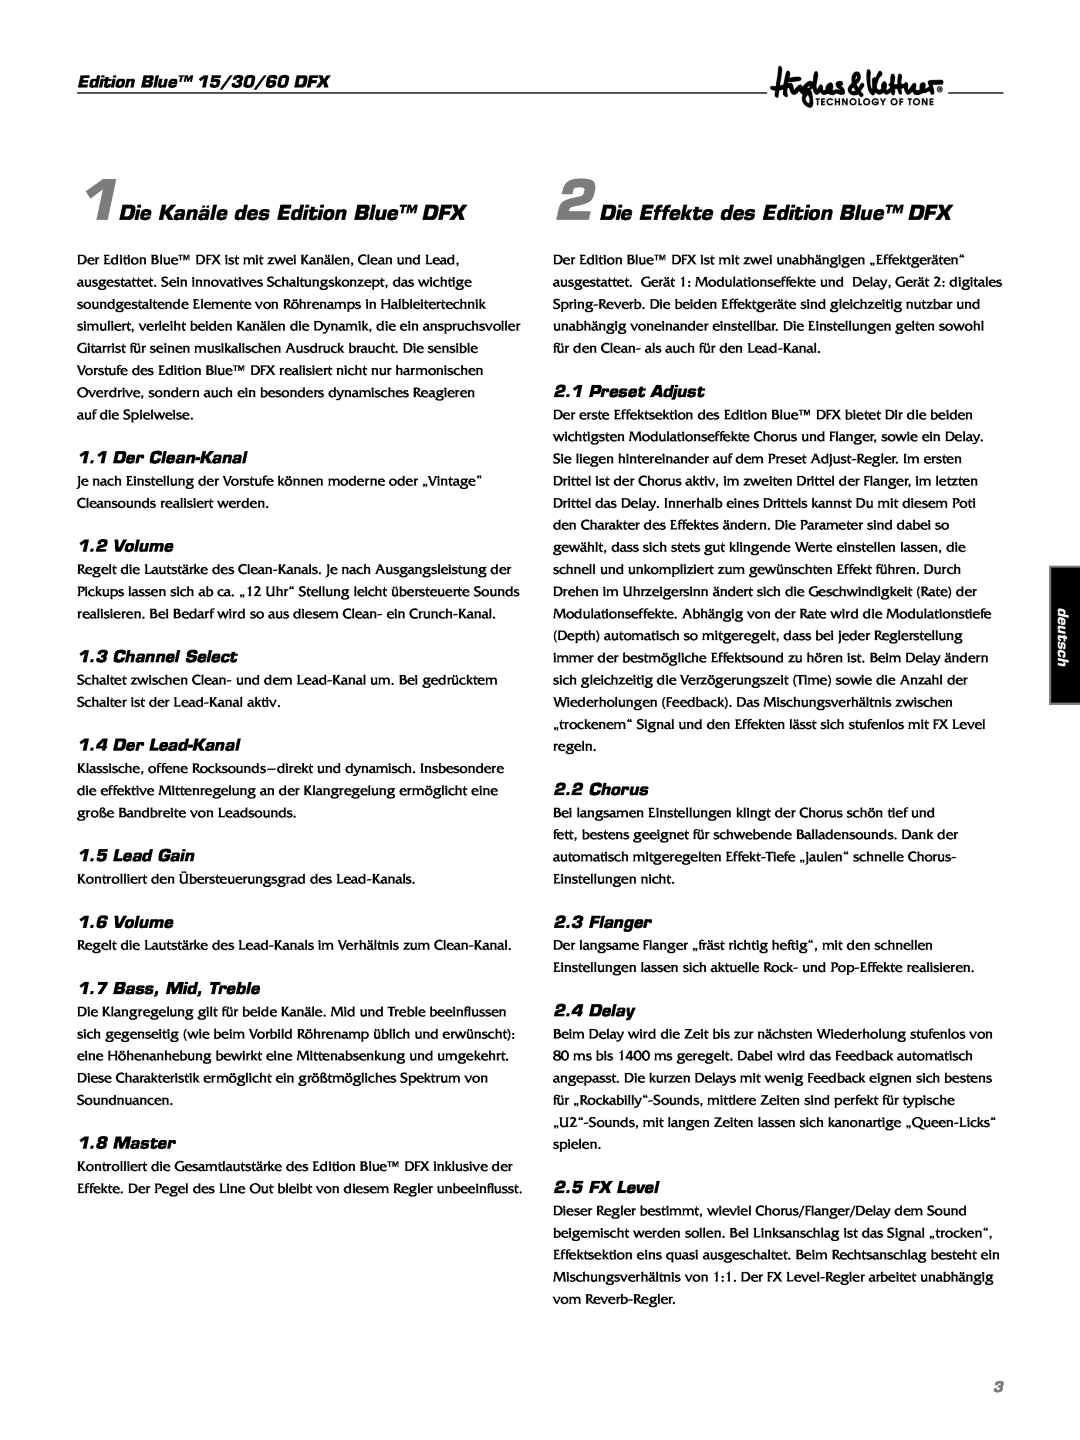 Hughes & Kettner manual 1Die Kanäle des Edition Blue DFX, Die Effekte des Edition Blue DFX 